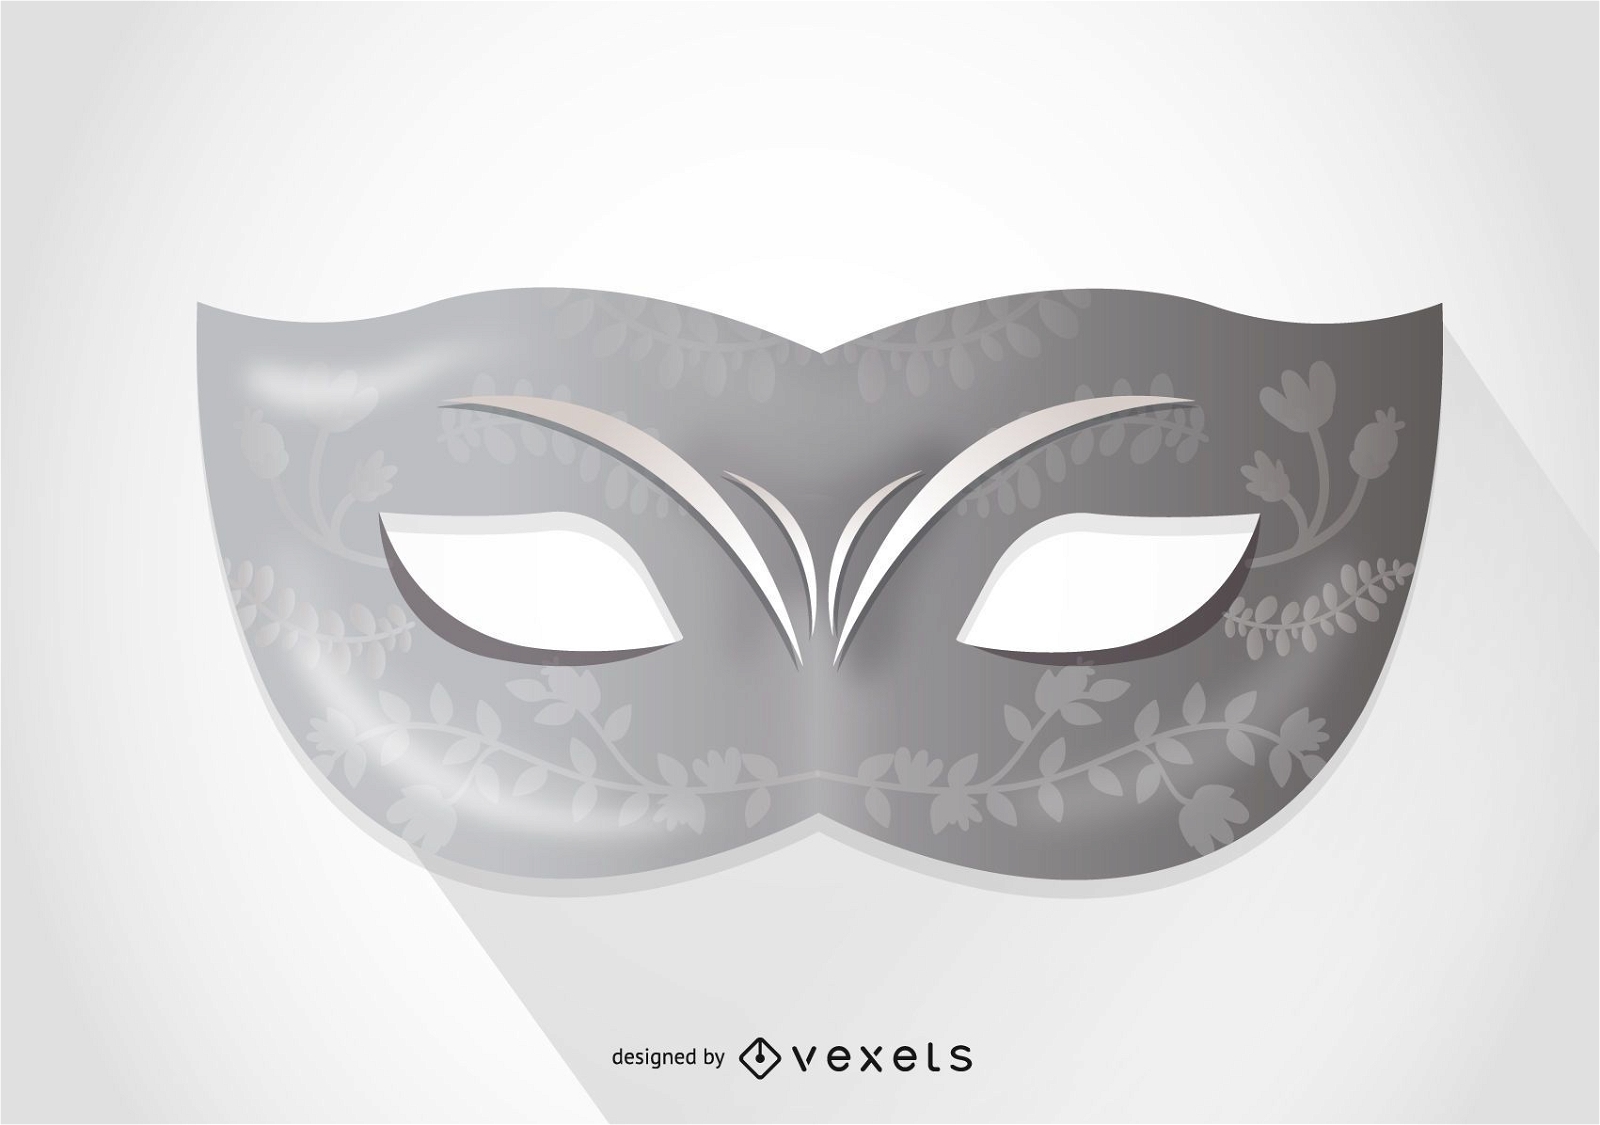 Minimalist Venice carnival mask